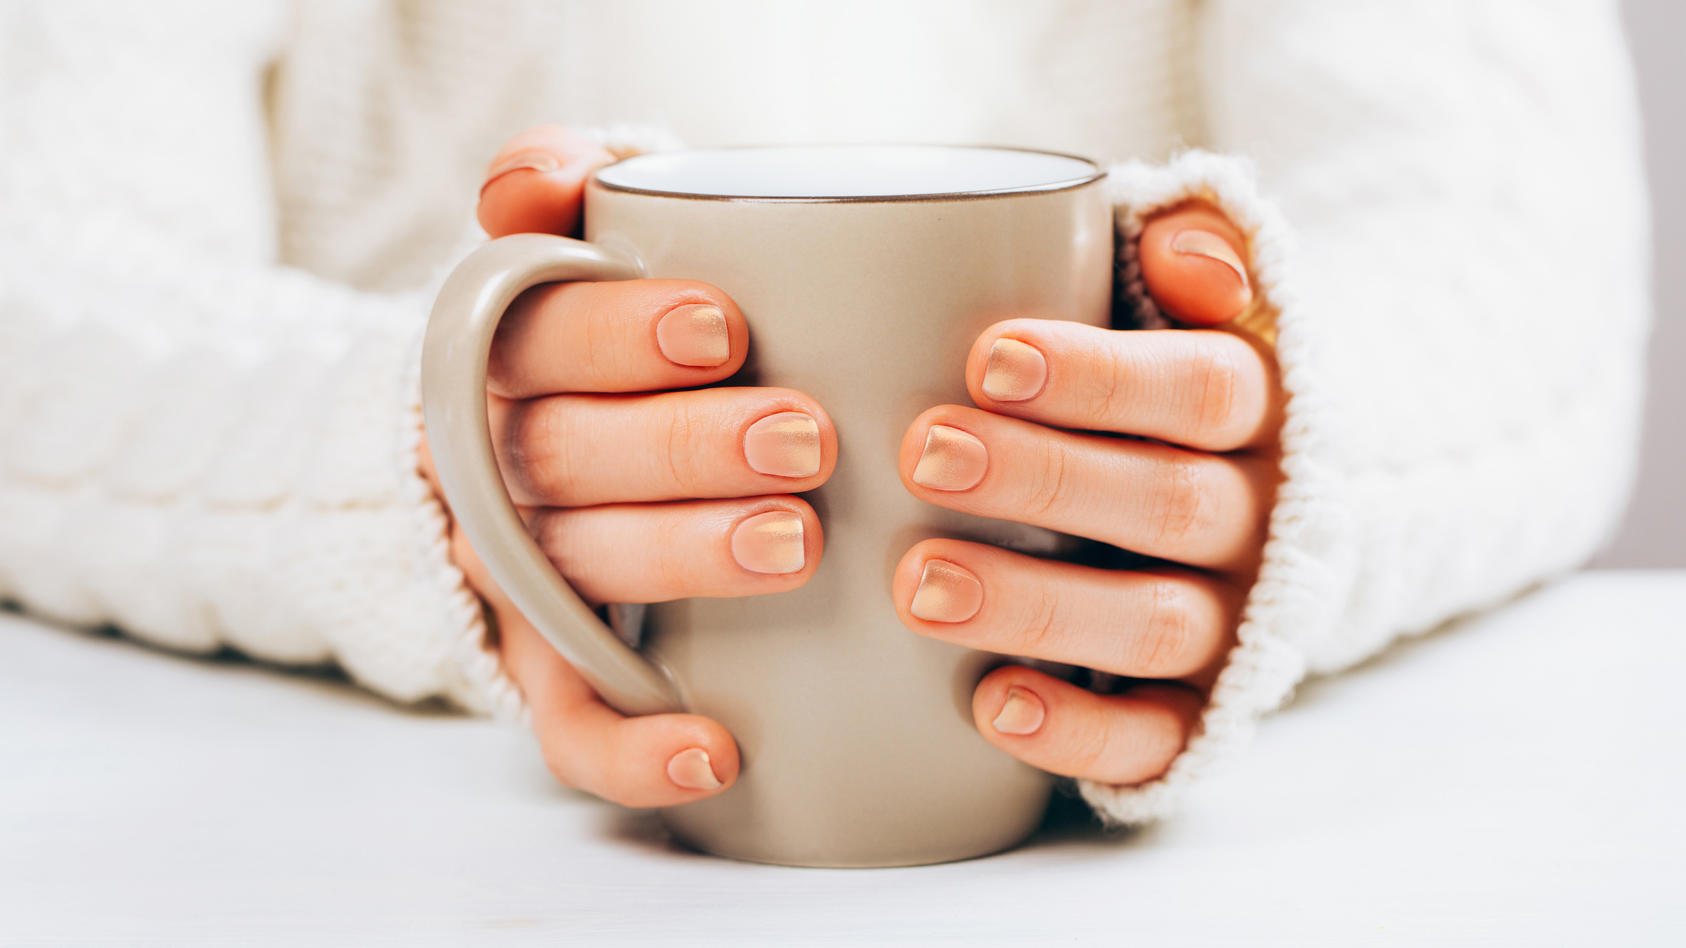 Frau mit Cappuccino Nails hält Kaffee.